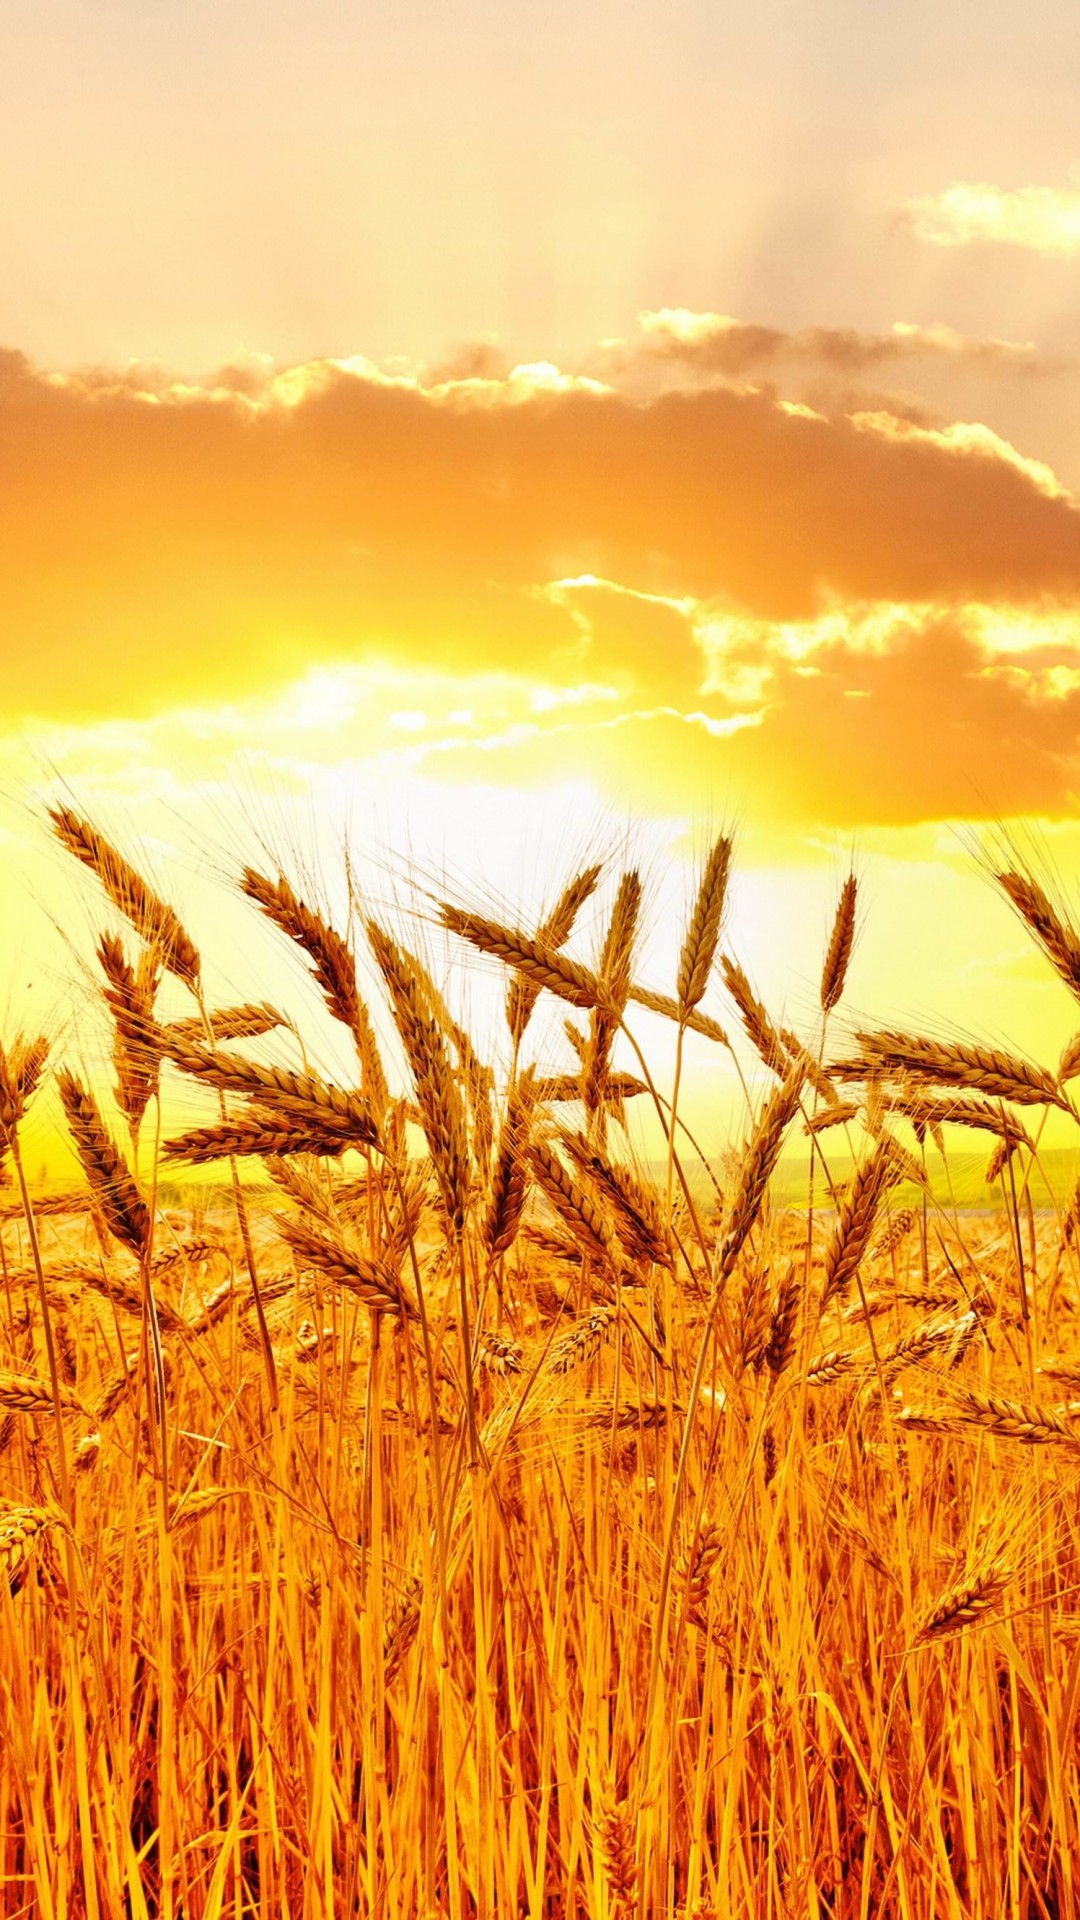 Golden Wheat Field At Sunset Wallpaper for LG G2